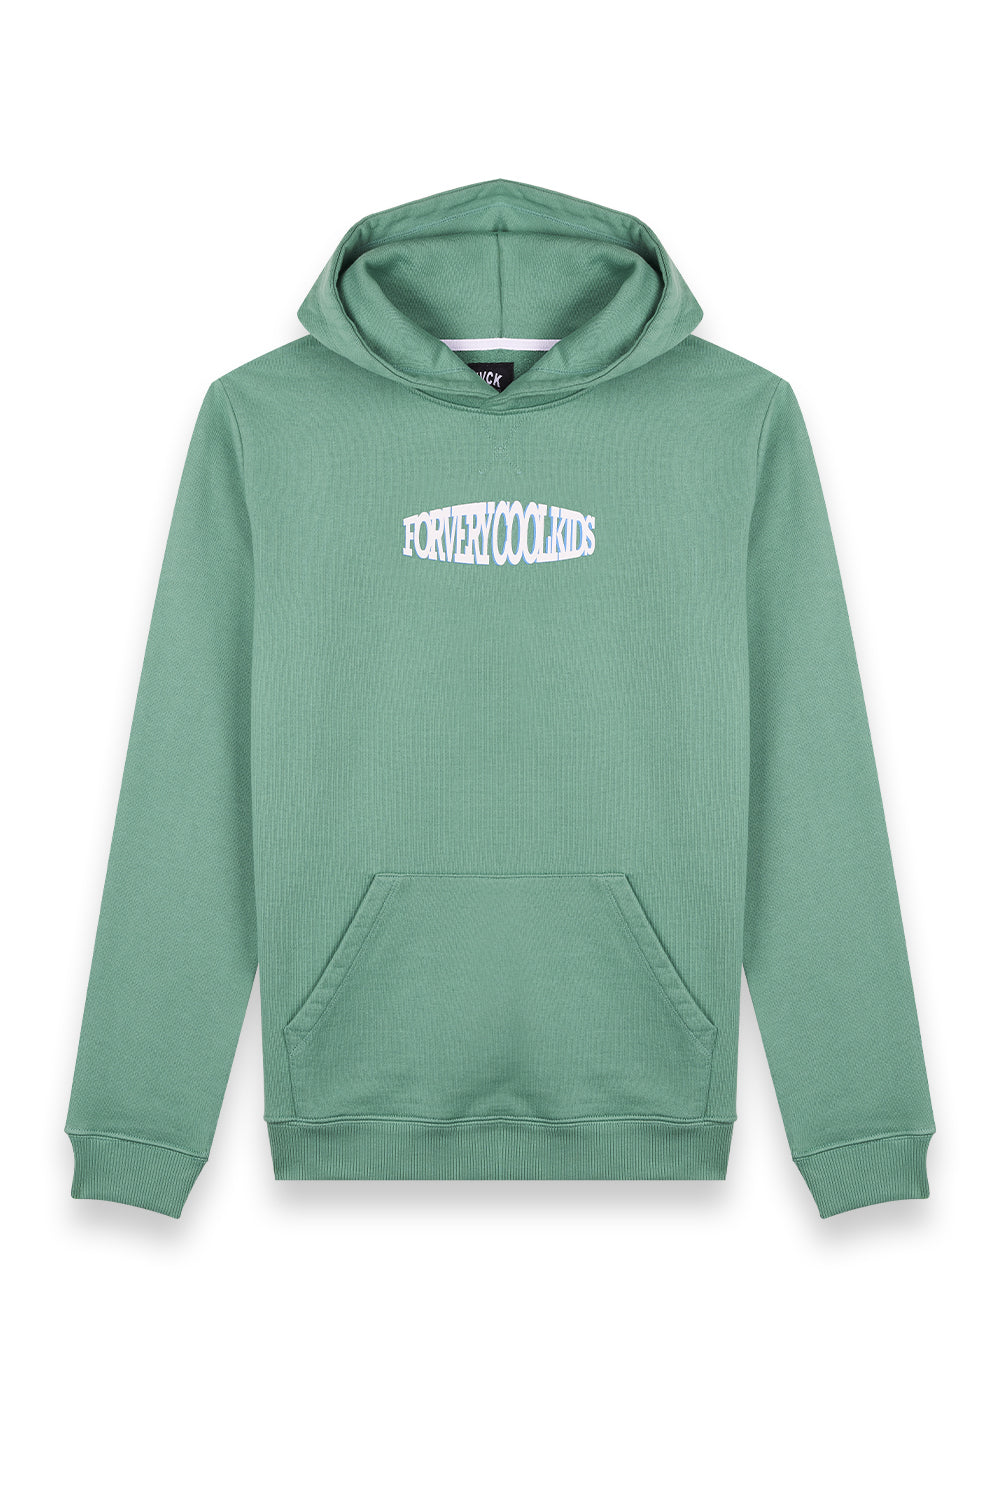 hoodie vert - green hoodie - fvck - forverycoolkids - hoodies - paris - france - streetwear - tealer - weiz - corteiz - rap - supreme - citadium - cool - for very cool kids - sweat à capuche -sweats -pull - hiphop - qualité 